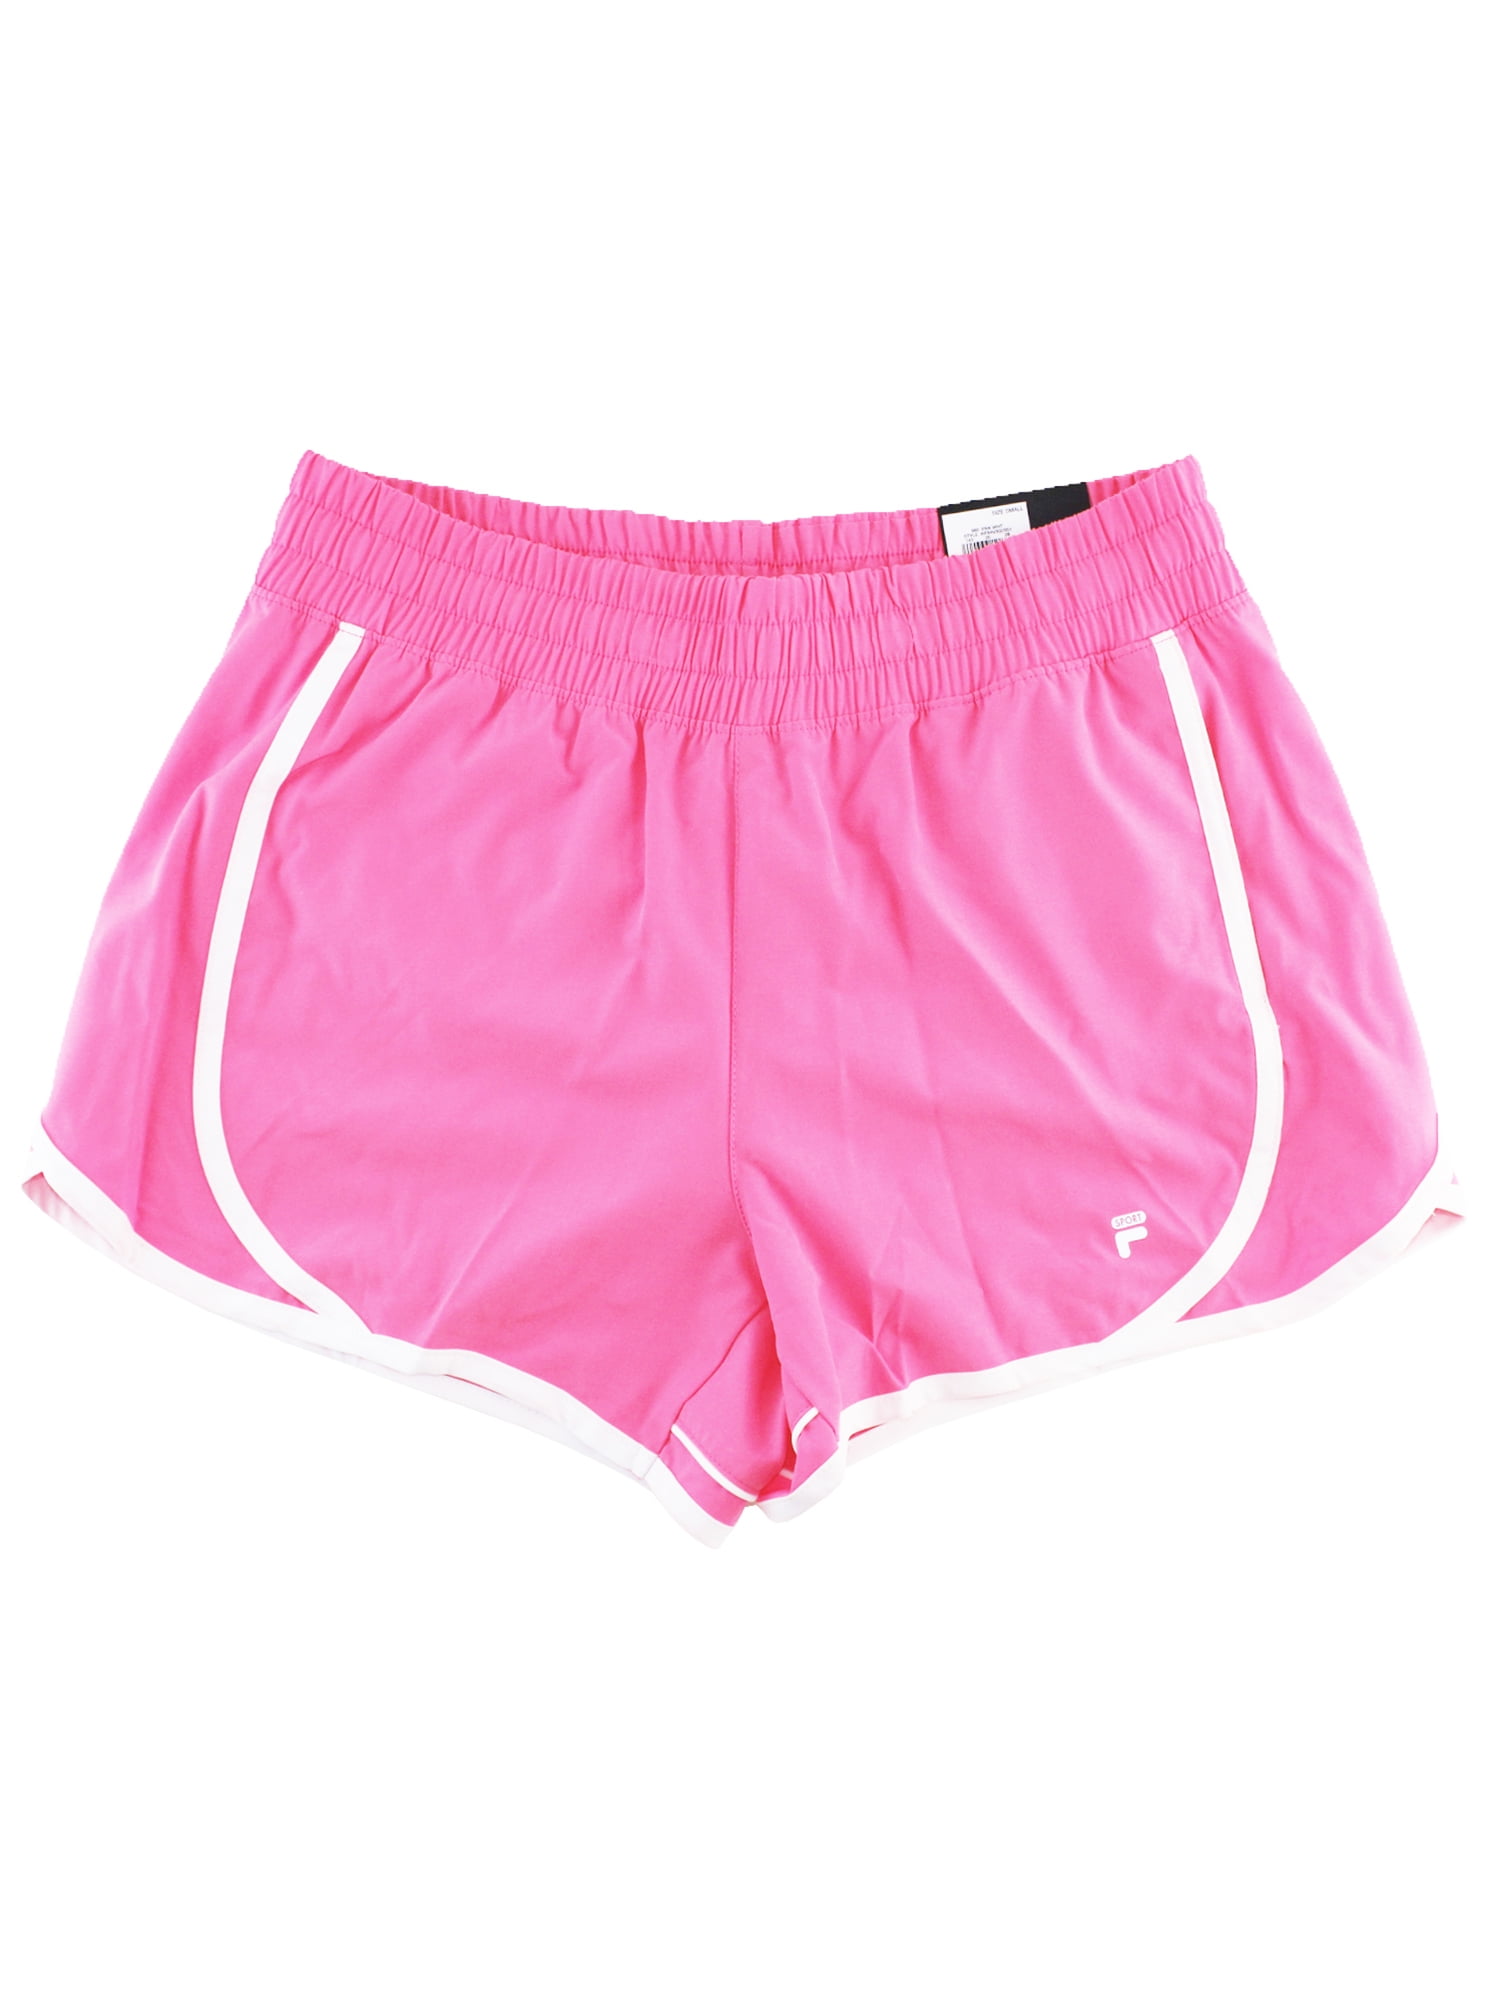 Fila Sport Women's Athletic Sport Mid Rise Shorts Pink Trillion WF84V302RS1 - Walmart.com